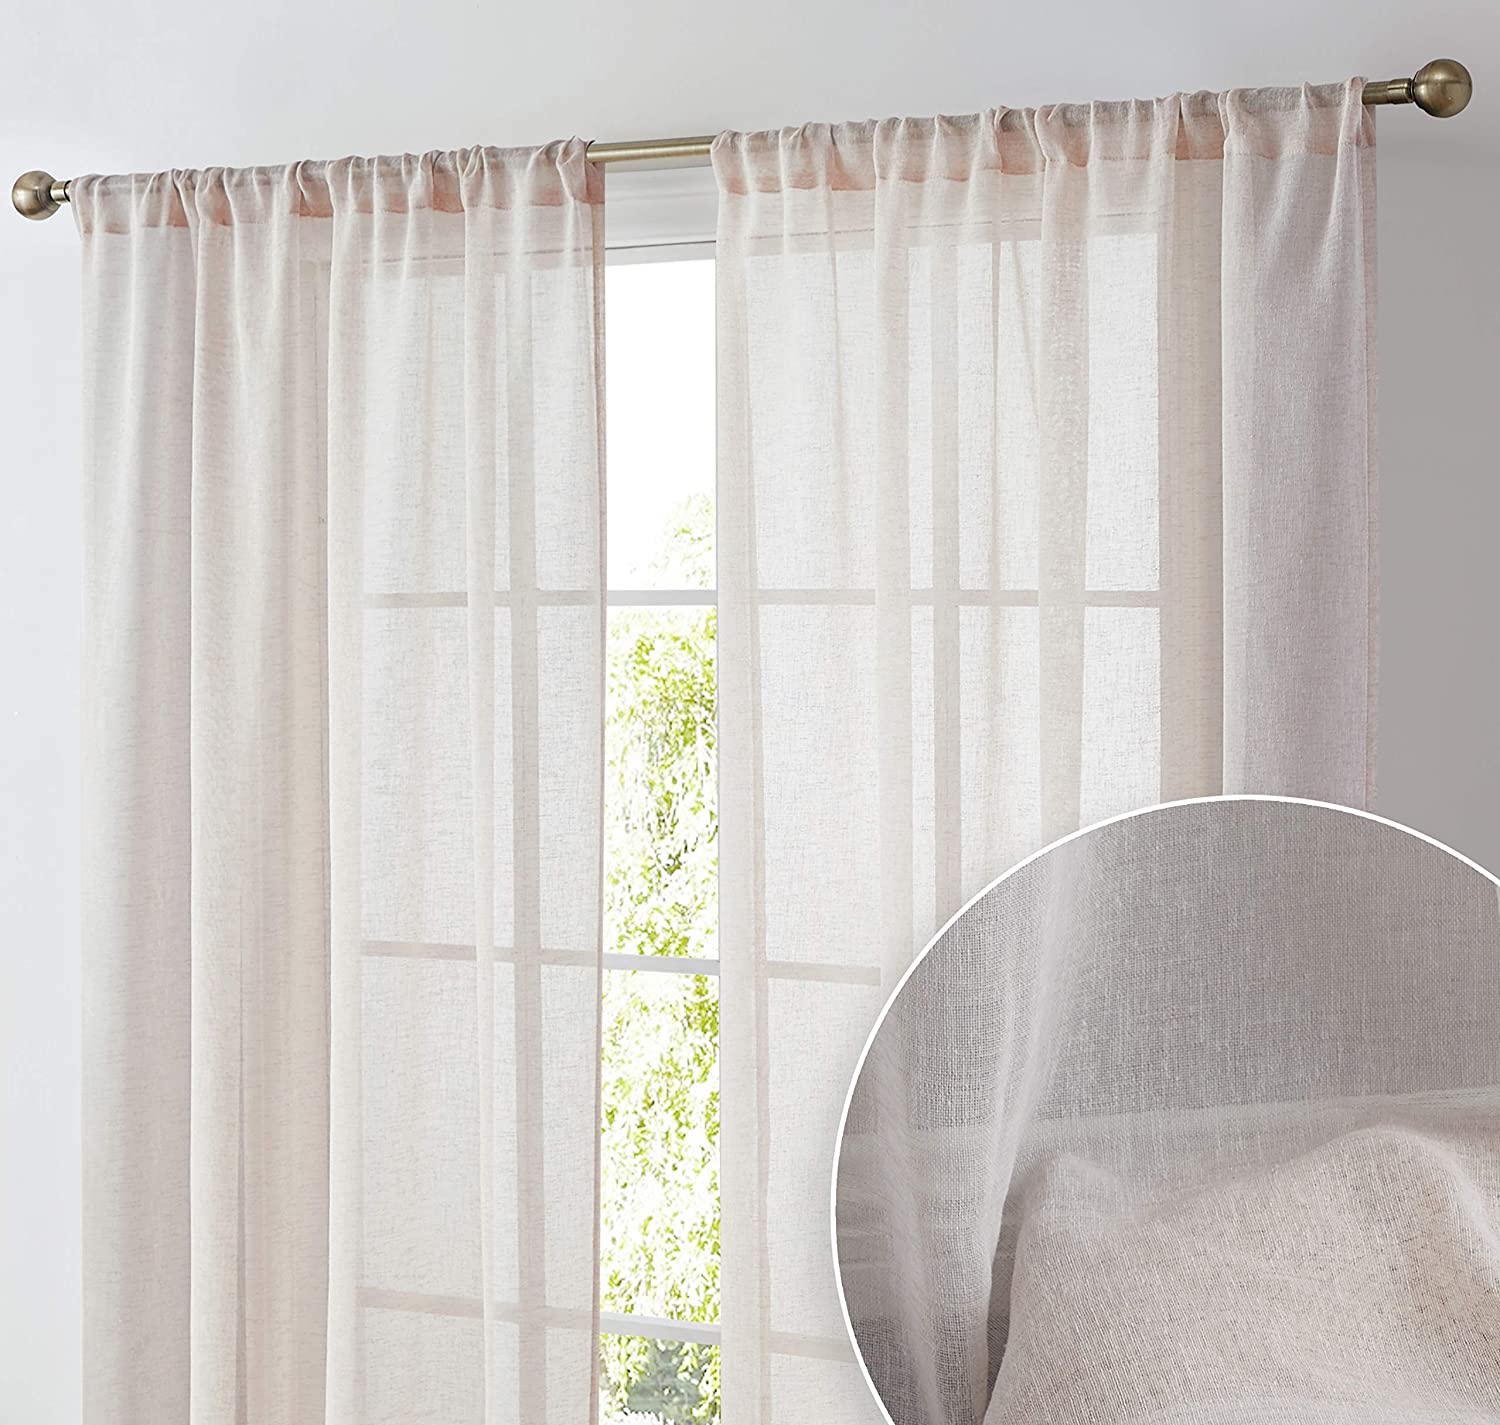 HLC.ME 2 Piece Semi Sheer Voile Window Curtain Drapes Grommet Panels for Bedroom, Living Room & Kids Room - White